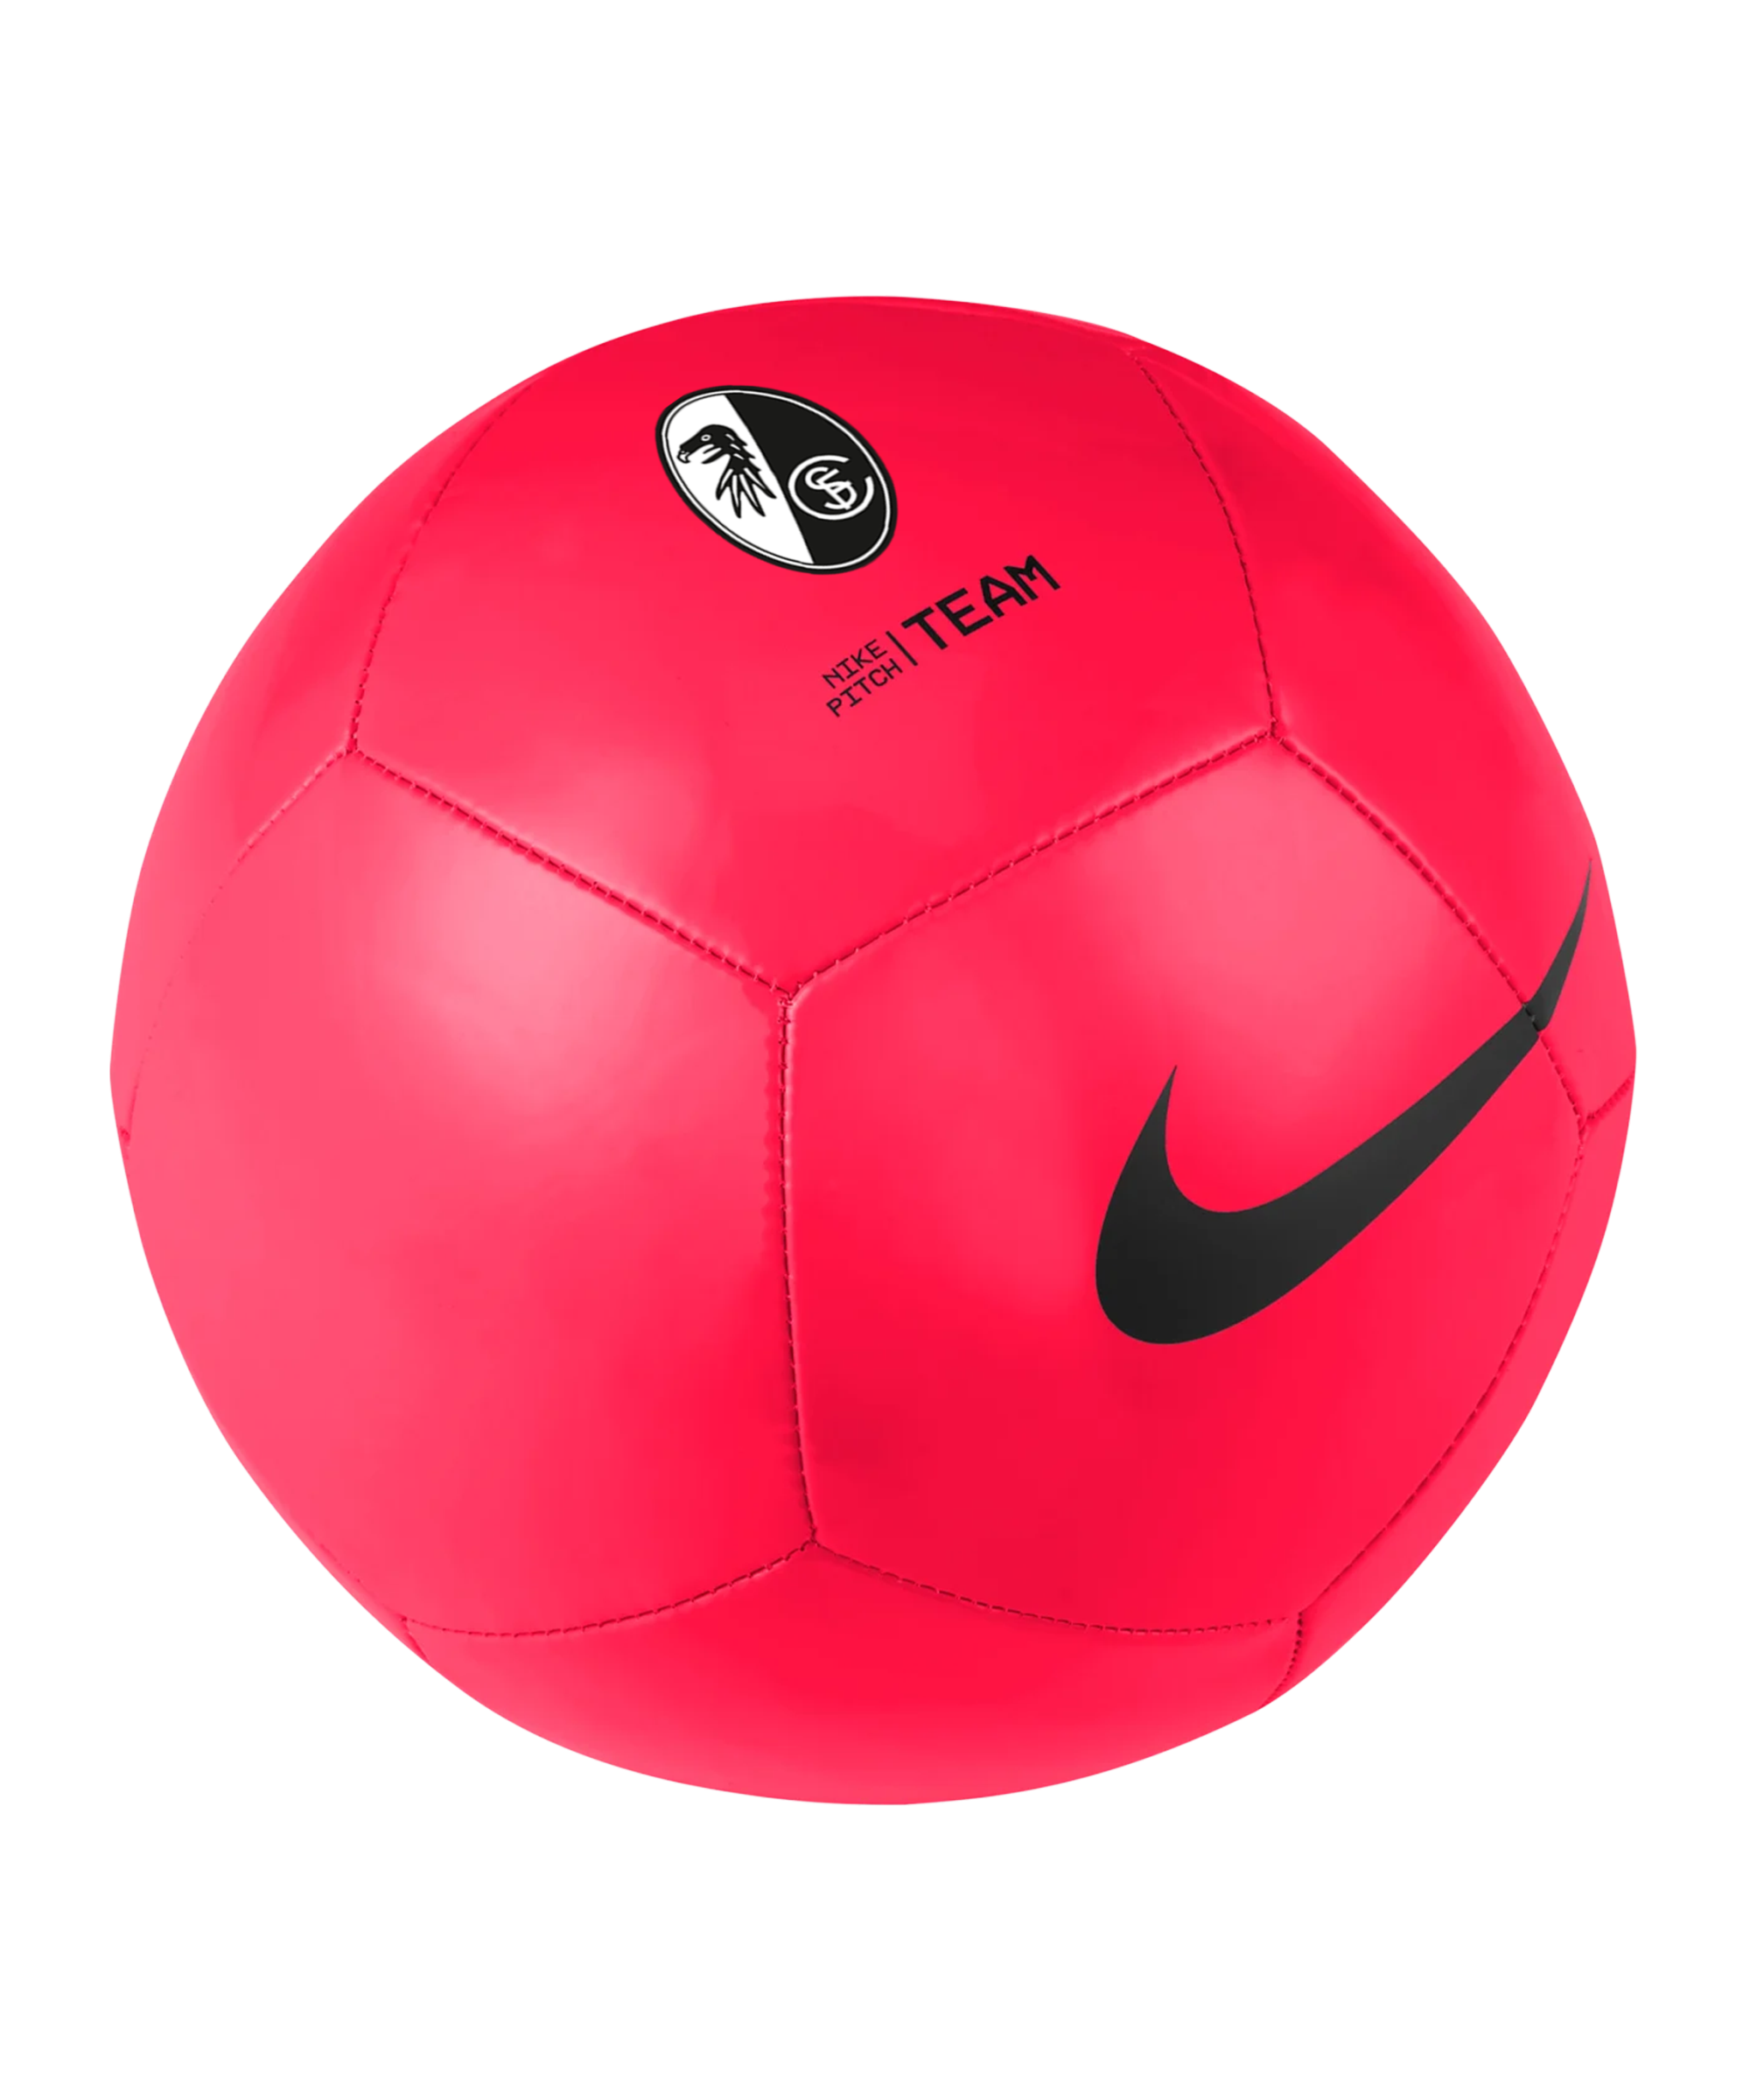 Nike SC Freiburg Fan-Ball